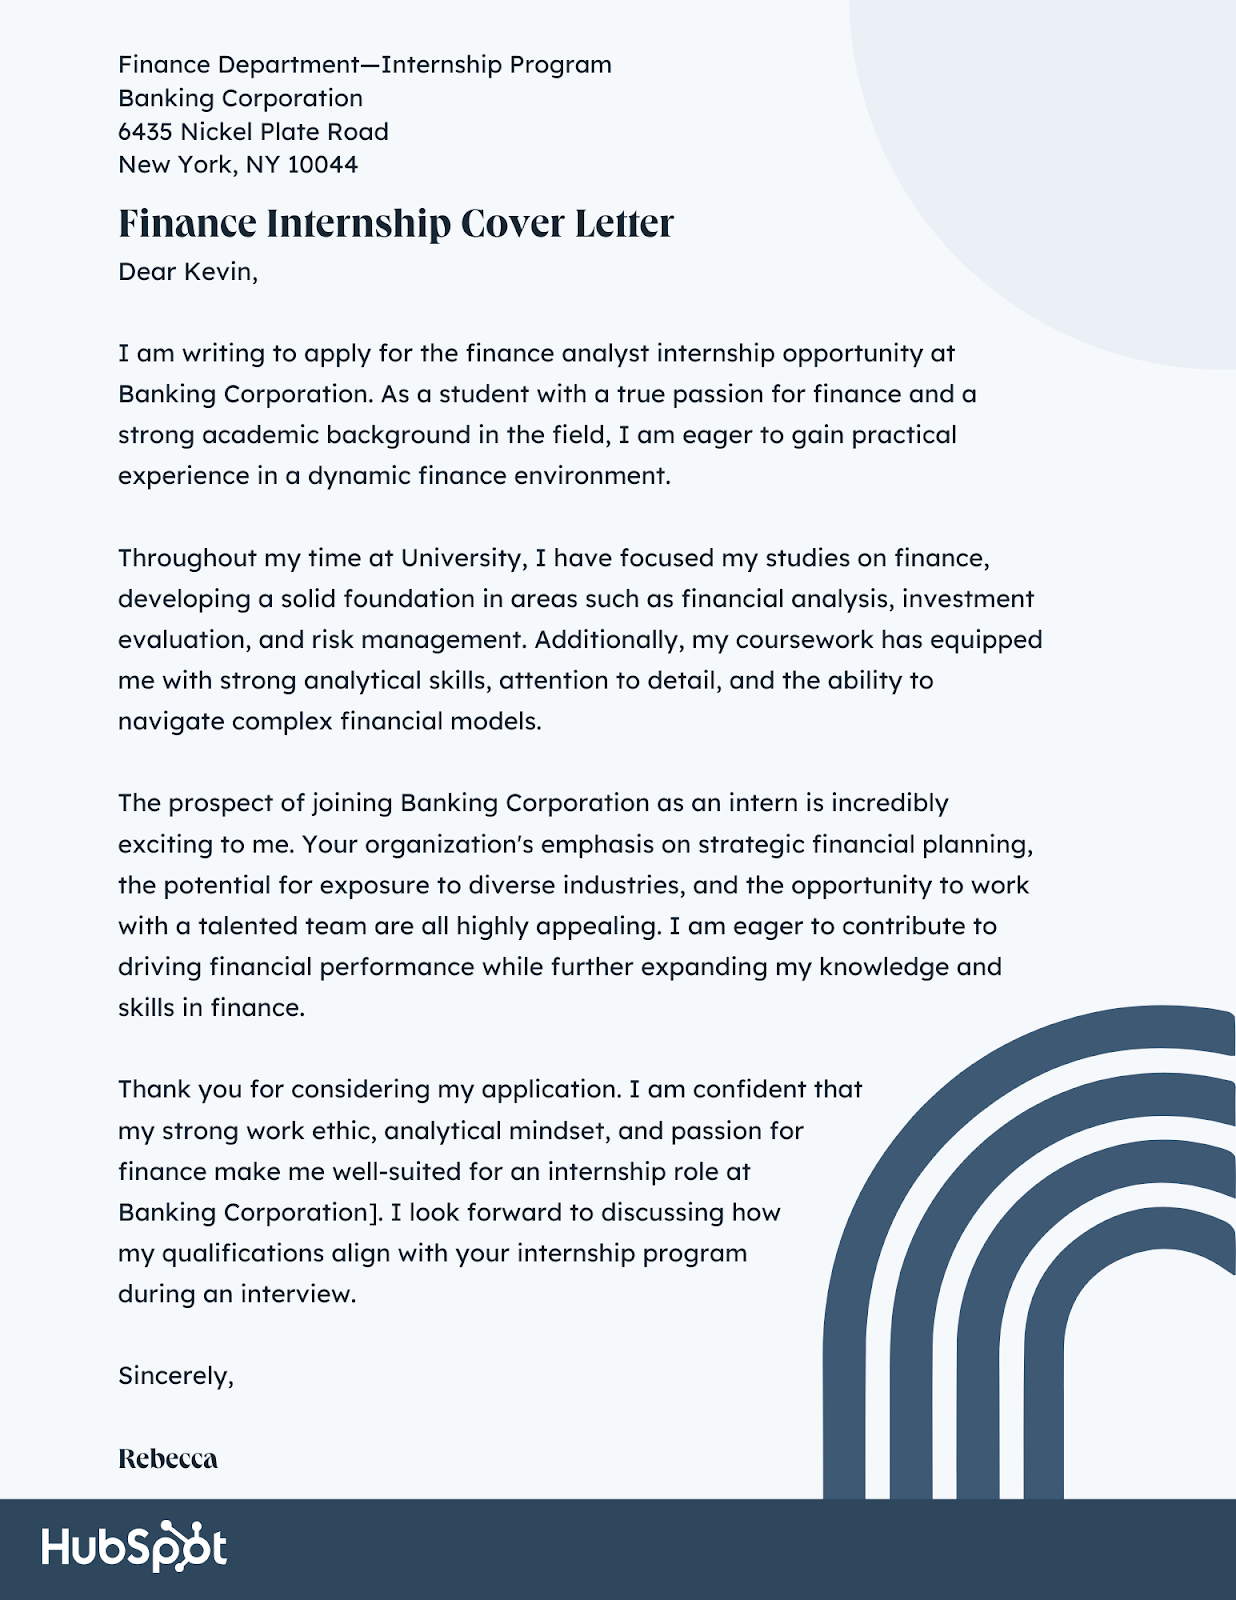 Internship Cover Letter Examples: Finance Internship Cover Letter